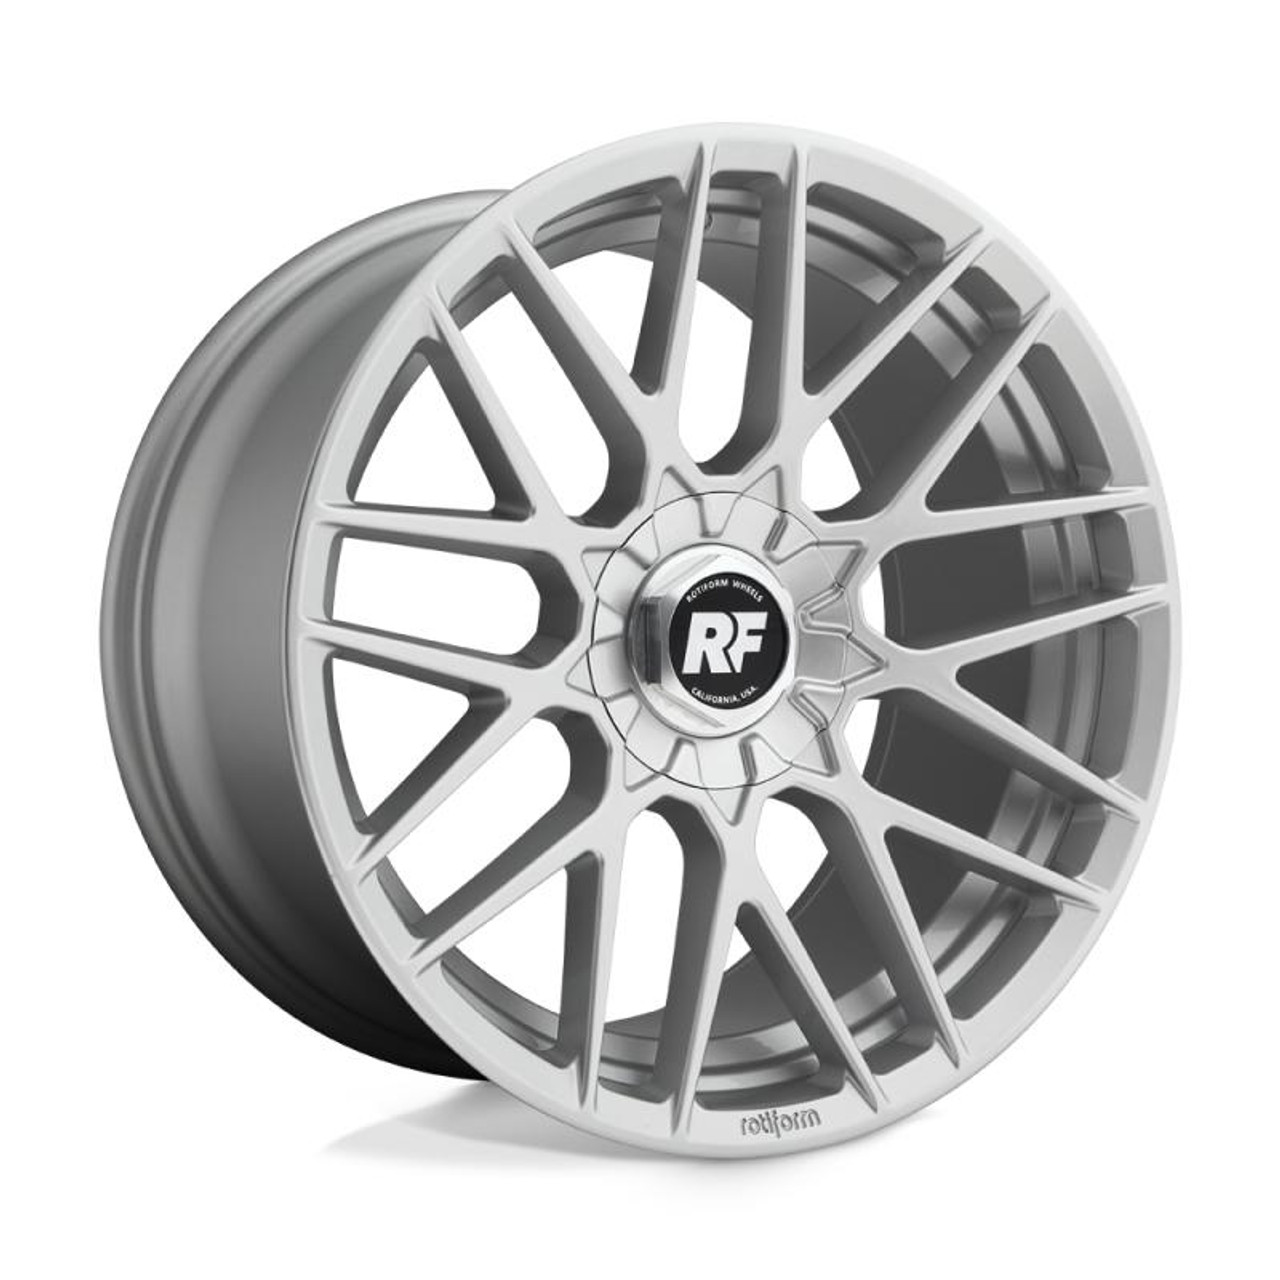  Rotiform R140 RSE Wheel 17x8 5x100/5x114.3 40 Offset - Gloss Silver - R140178003+40 